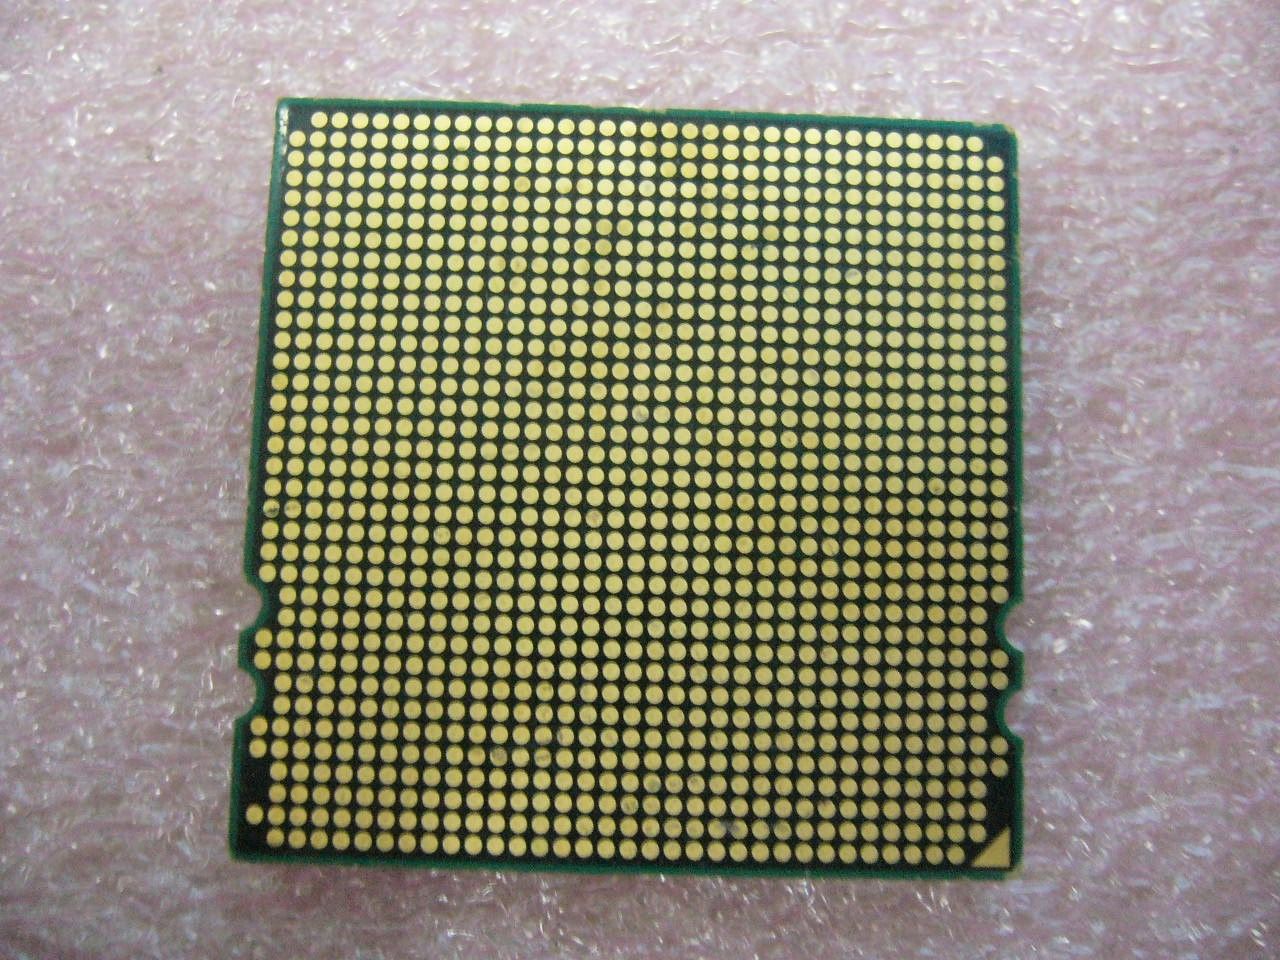 QTY 1x AMD Opteron 2427 2.2 GHz Six Core (OS2427WJS6DGN) CPU Socket F 1207 - zum Schließen ins Bild klicken